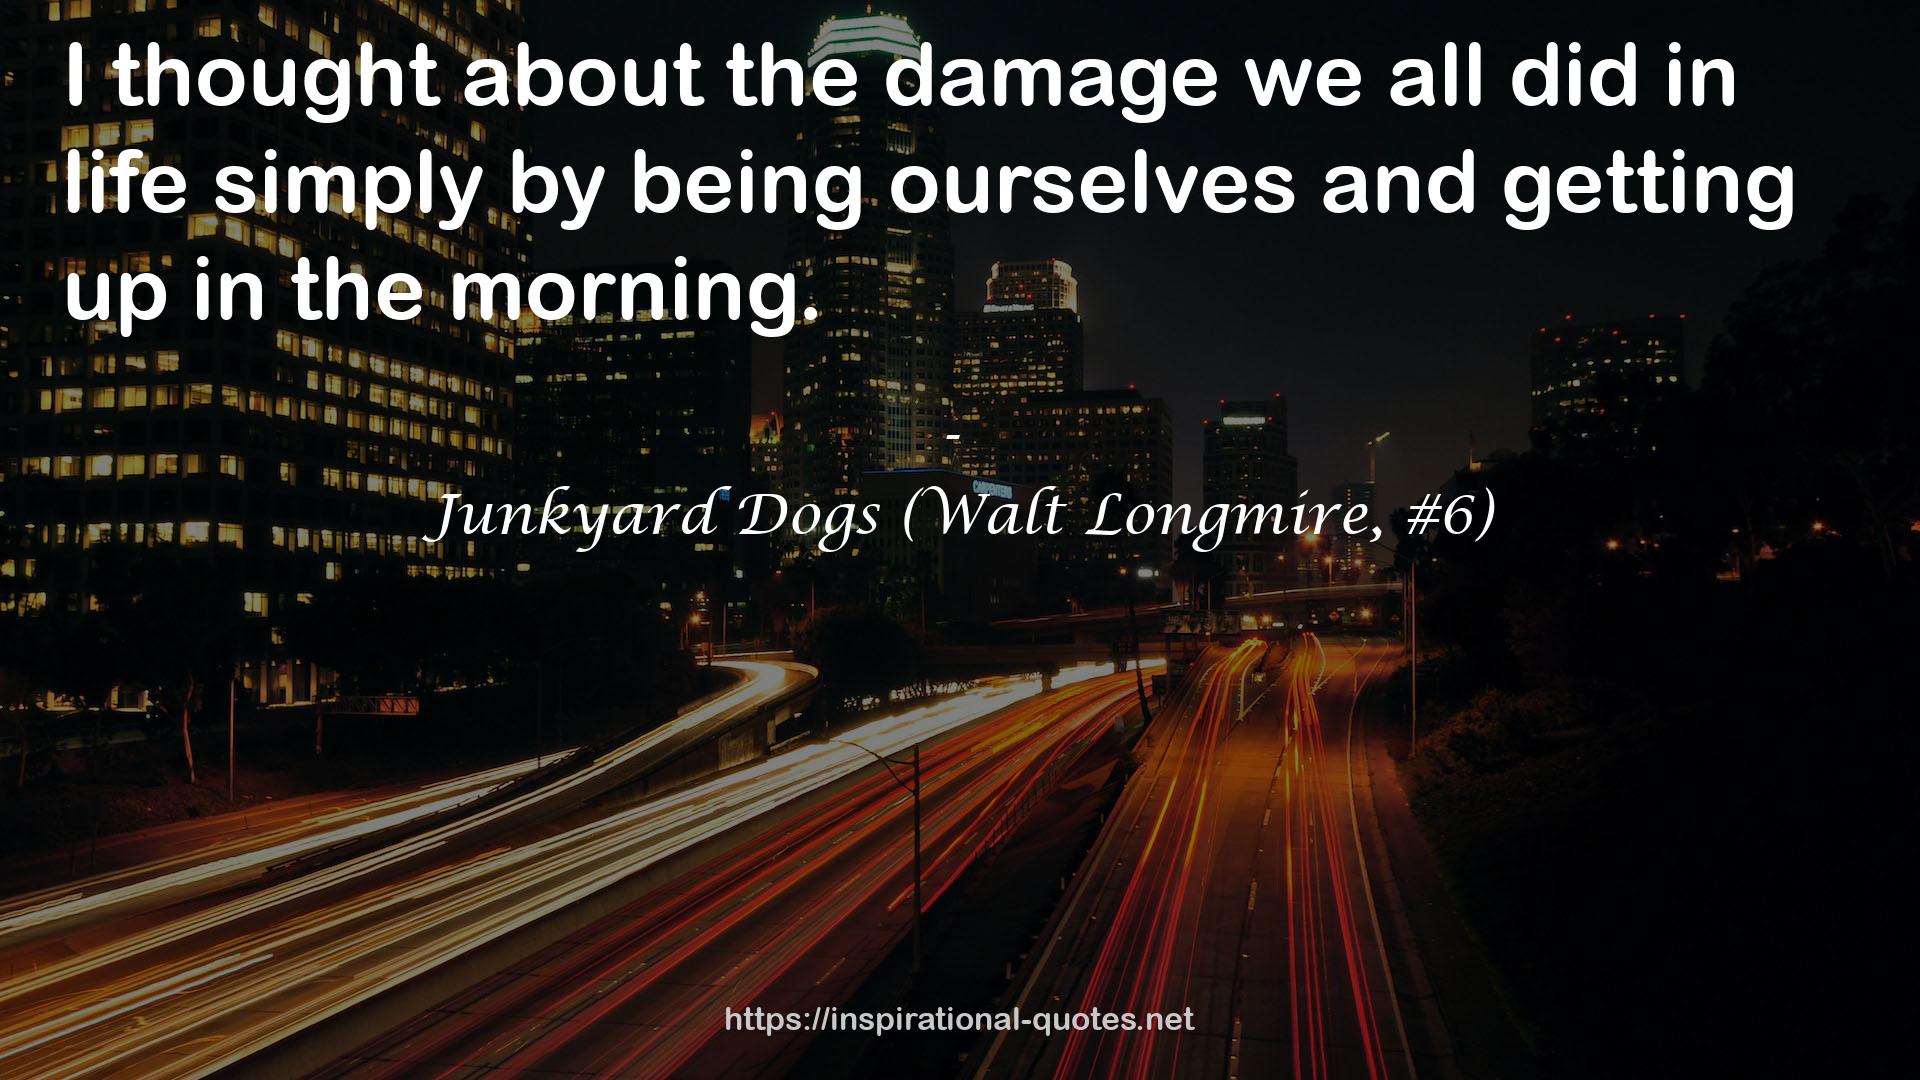 Junkyard Dogs (Walt Longmire, #6) QUOTES